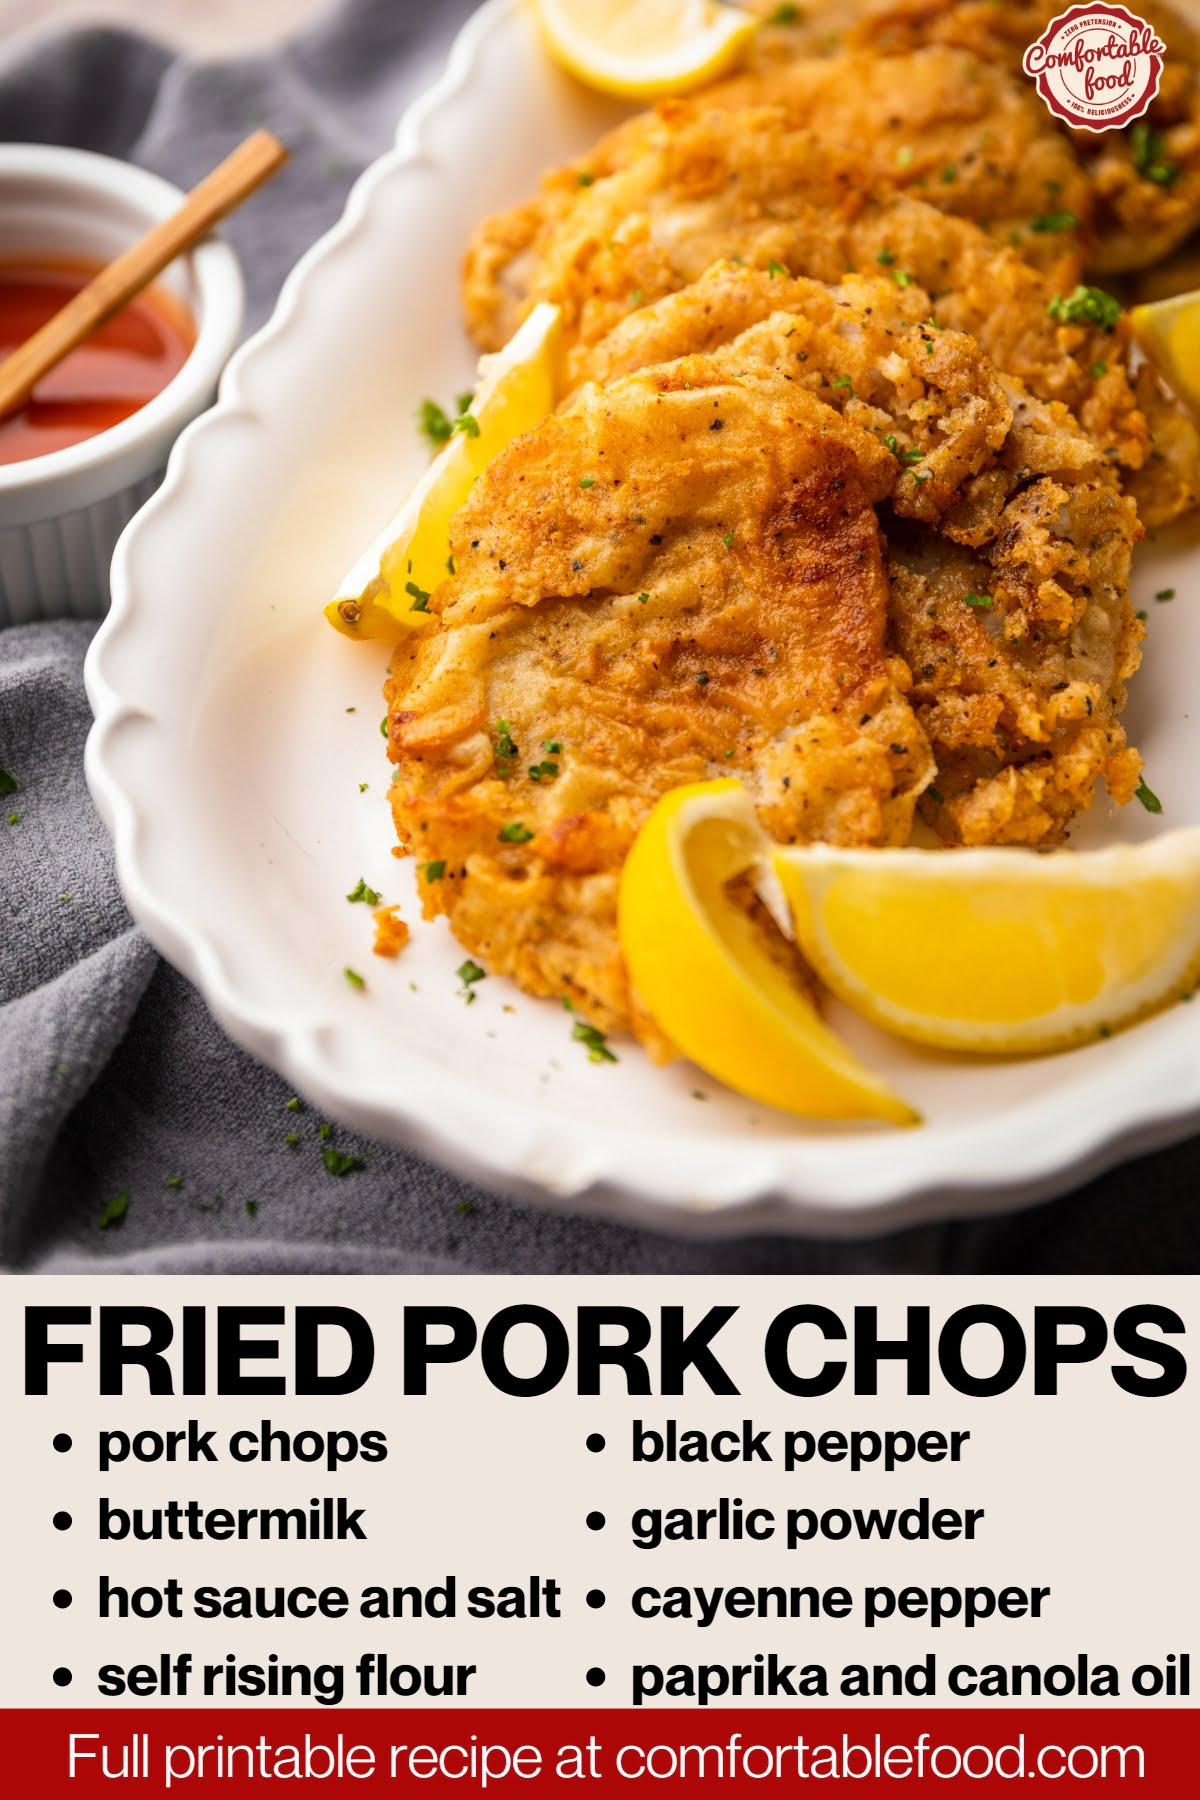 Fried pork chops socials